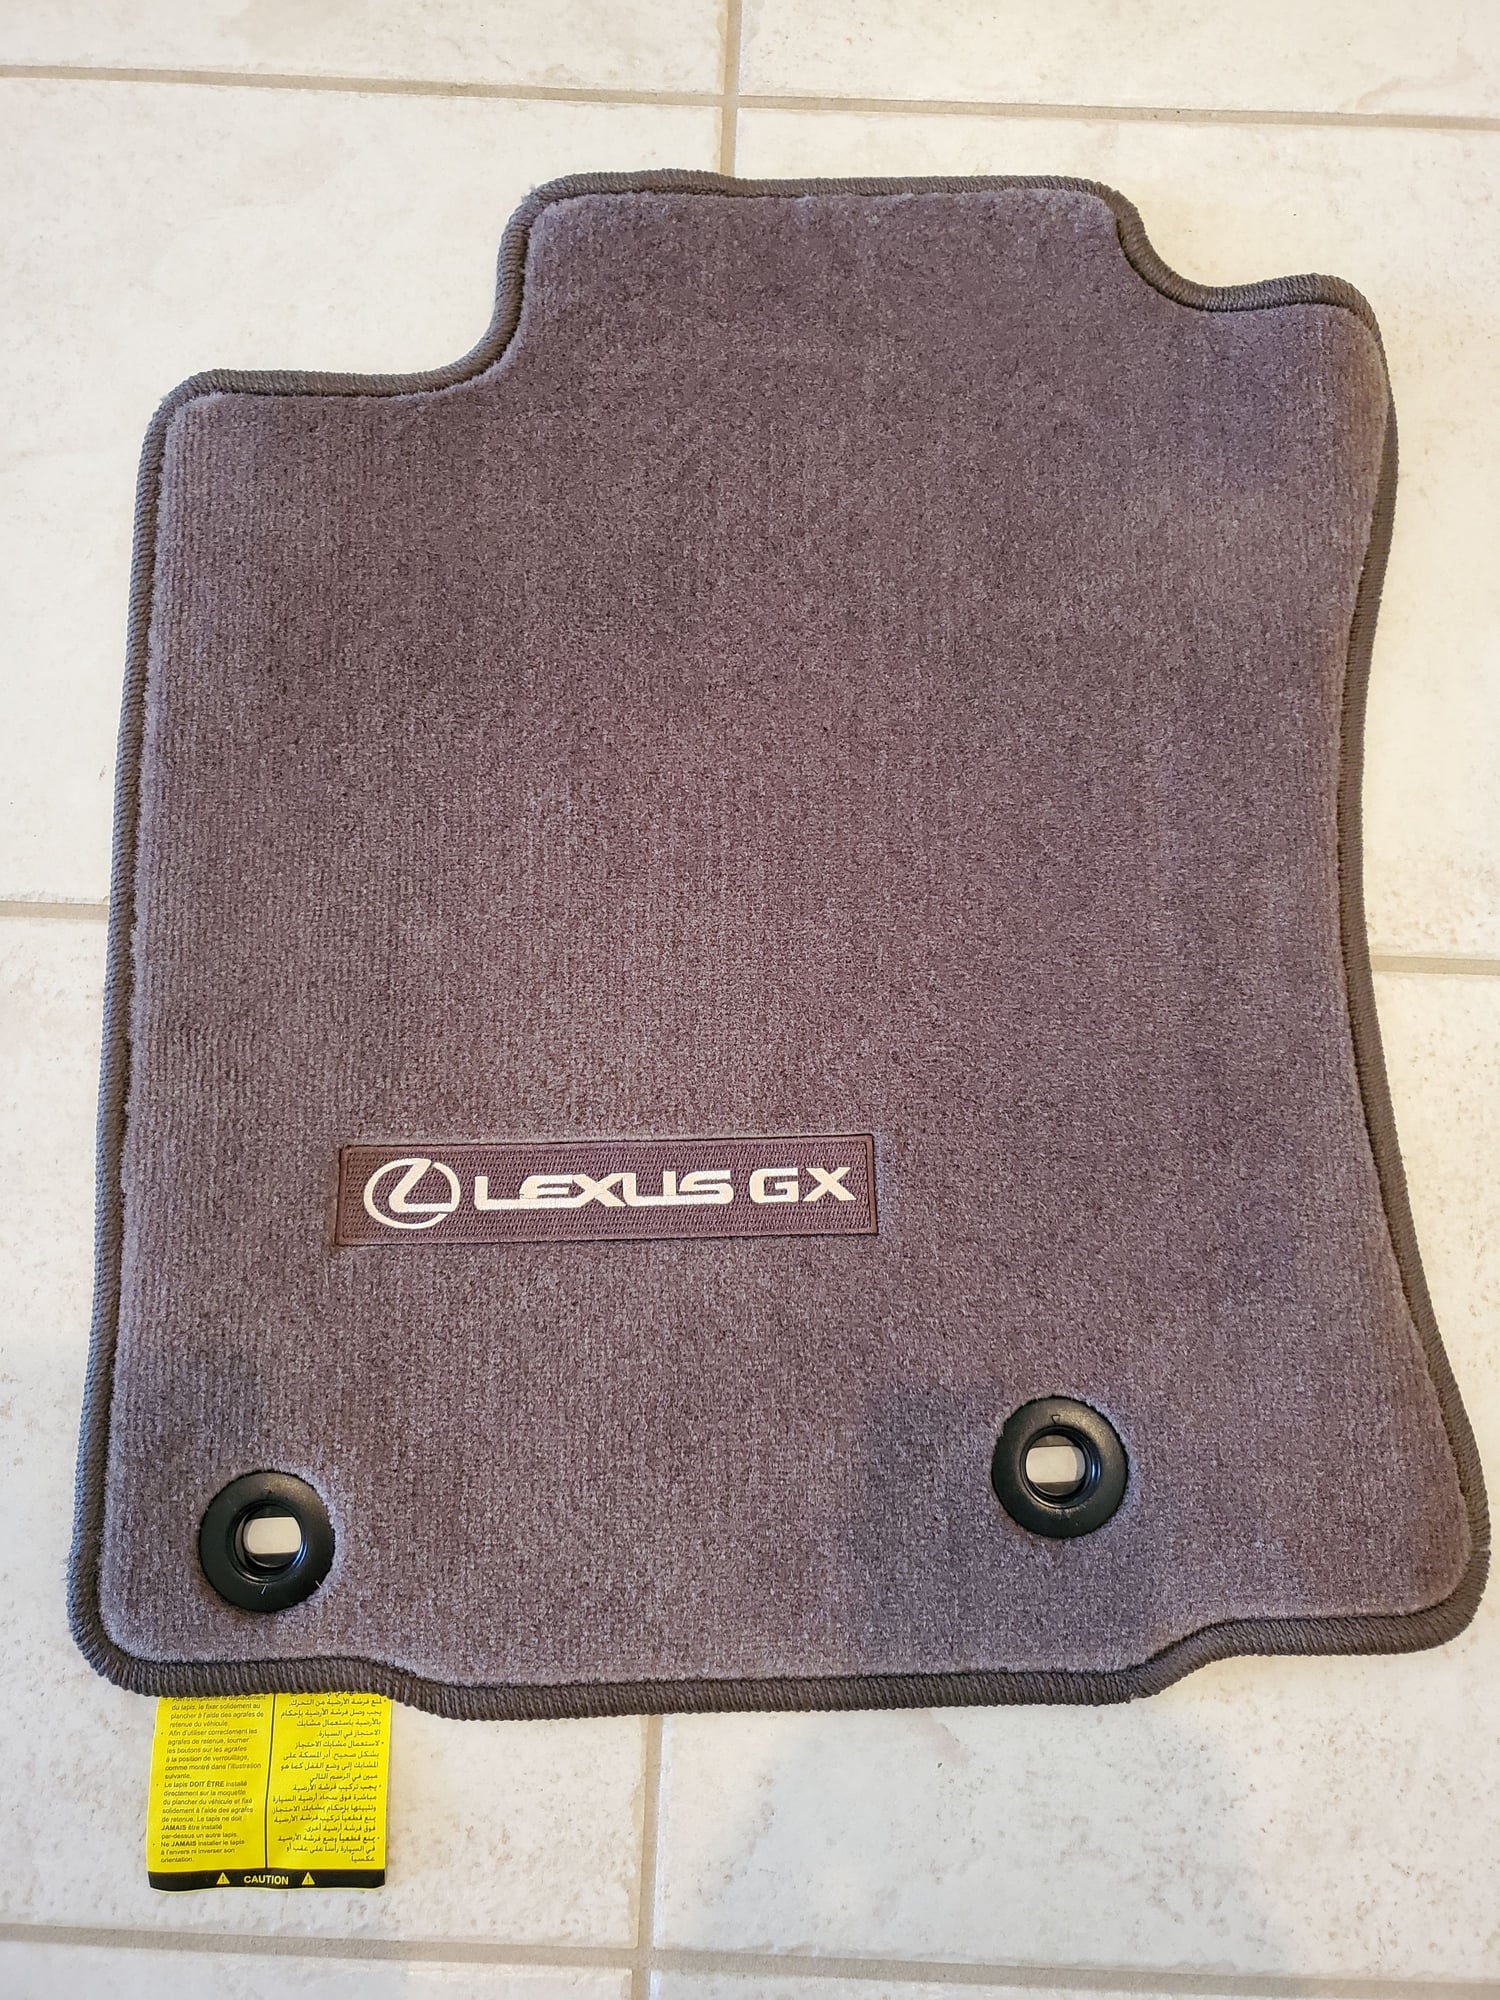 Interior/Upholstery - GX460 Floor Mats and Carpet Cargo Mat, New, Sepia interior color. - New - 2014 Lexus GX460 - Gold Canyon, AZ 85118, United States